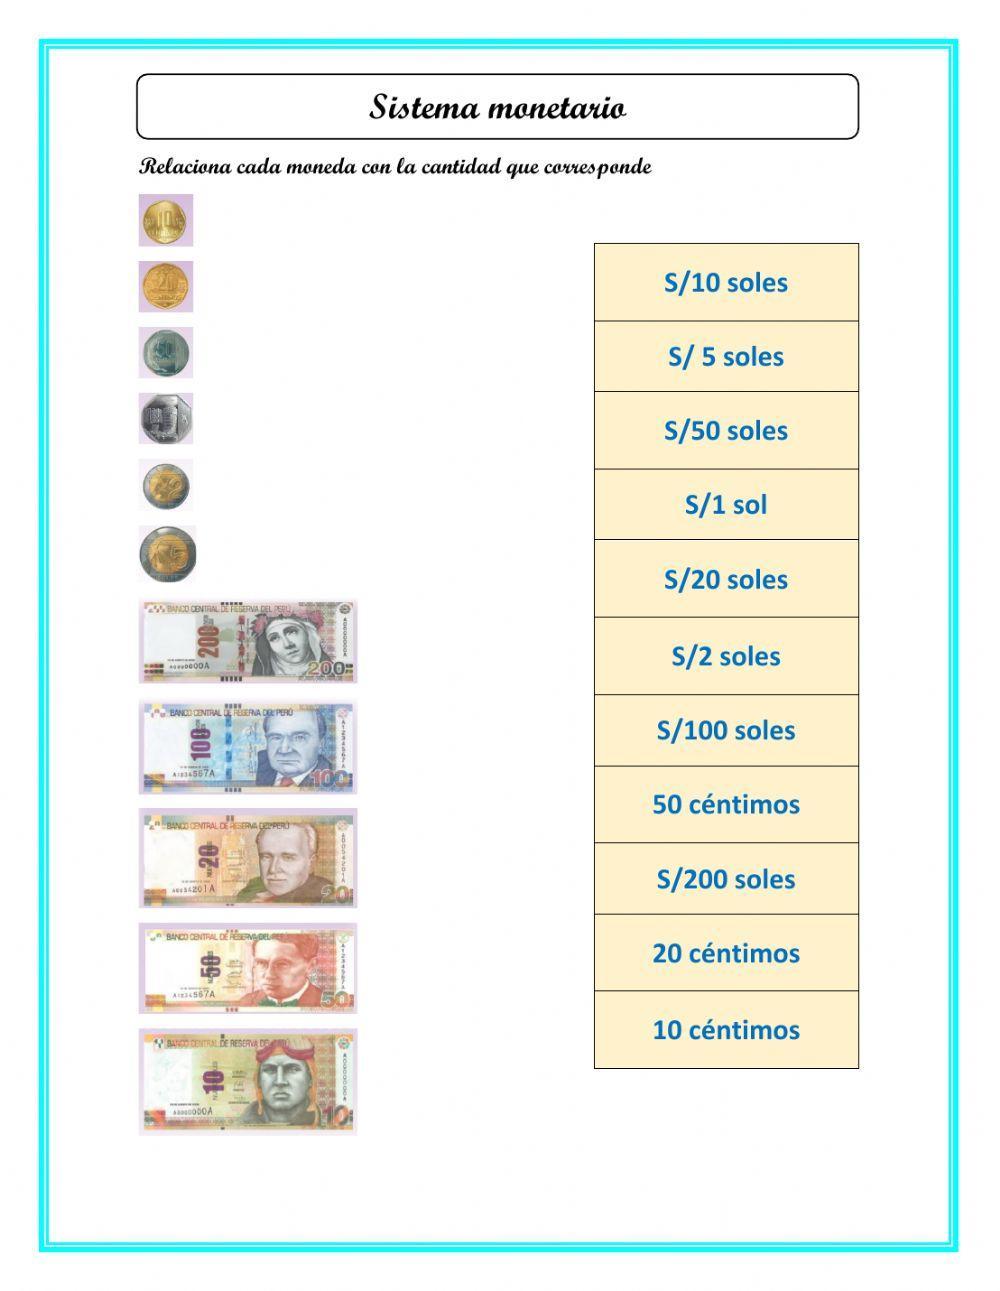 Sistema monetario peruano